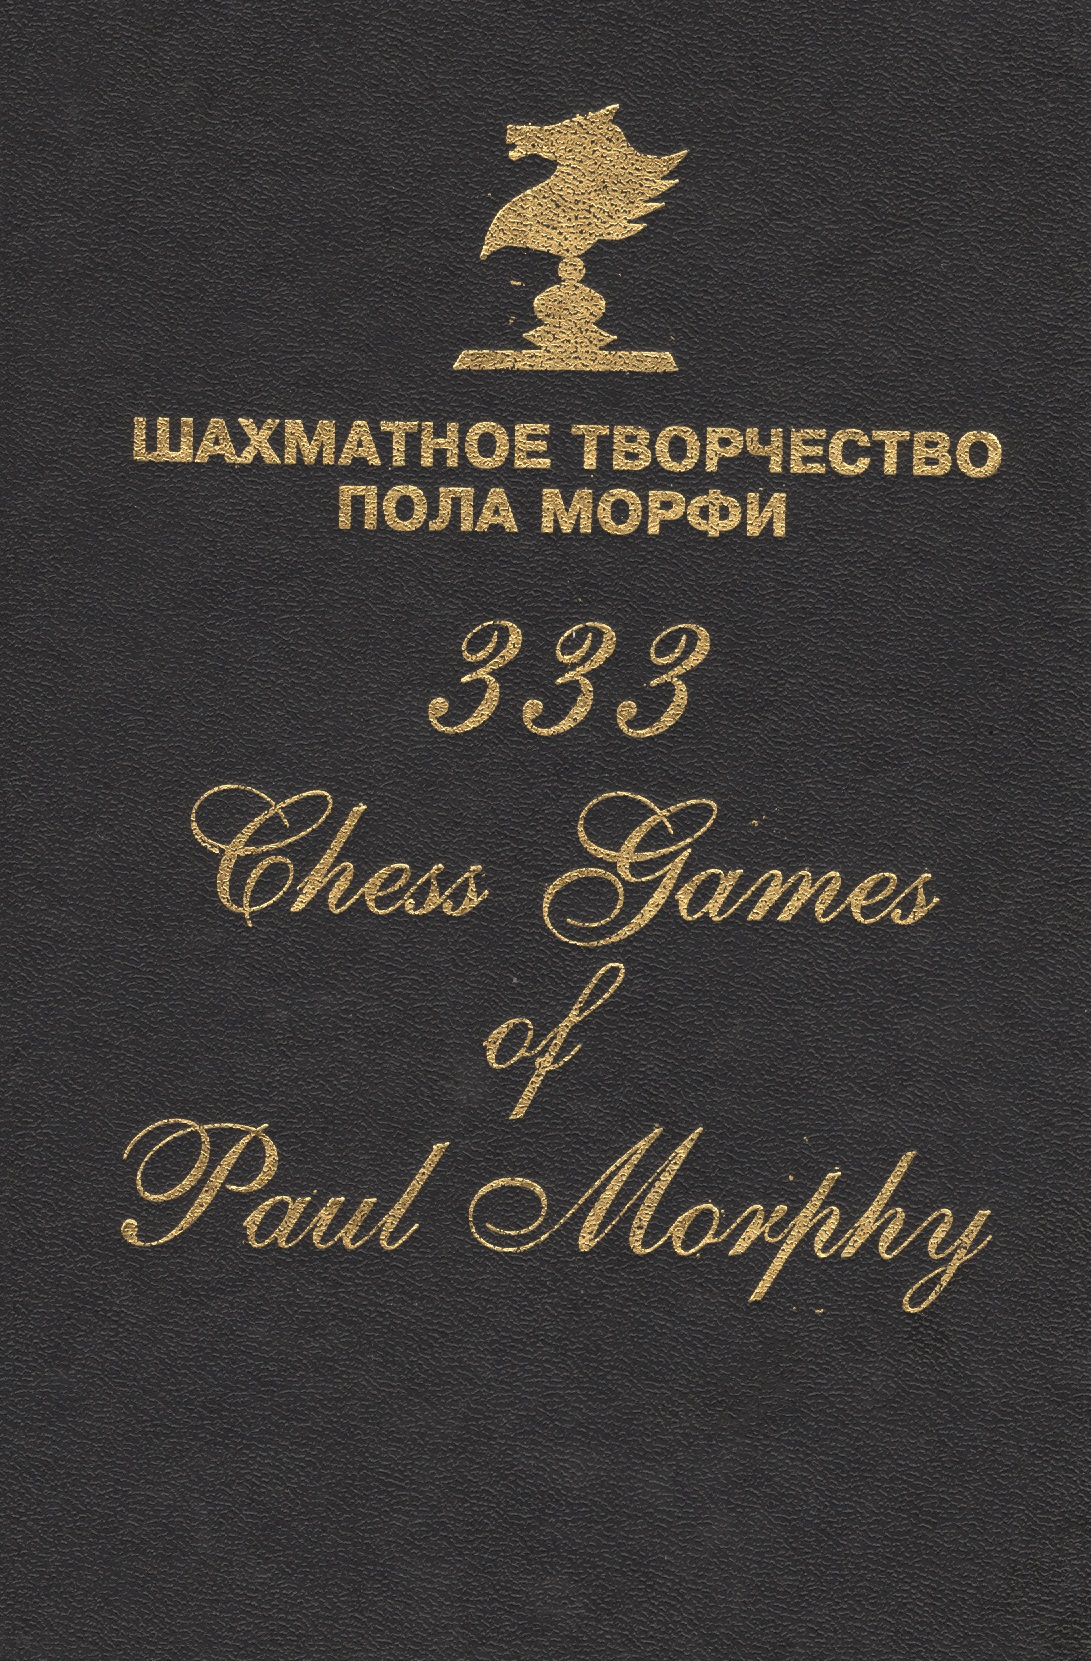 Шахматное творчество Пола Морфи 333 Chess games of Paul Morphy (Сафиуллин) сафиуллин р ред сост шахматное творчество пола морфи 333 chess games of paul morphy